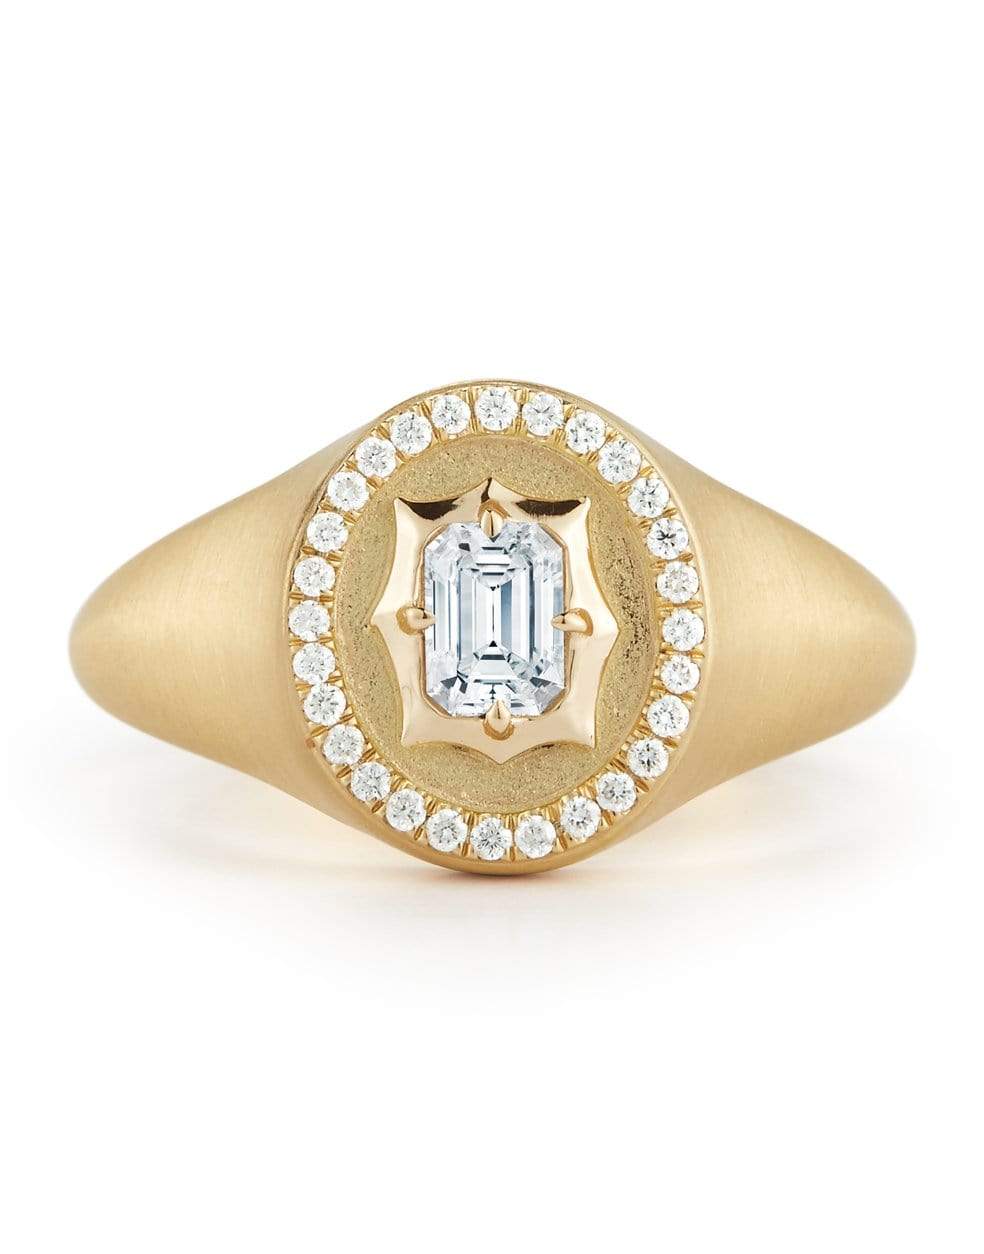 JADE TRAU-Vanguard Diamond Signet Ring-YELLOW GOLD